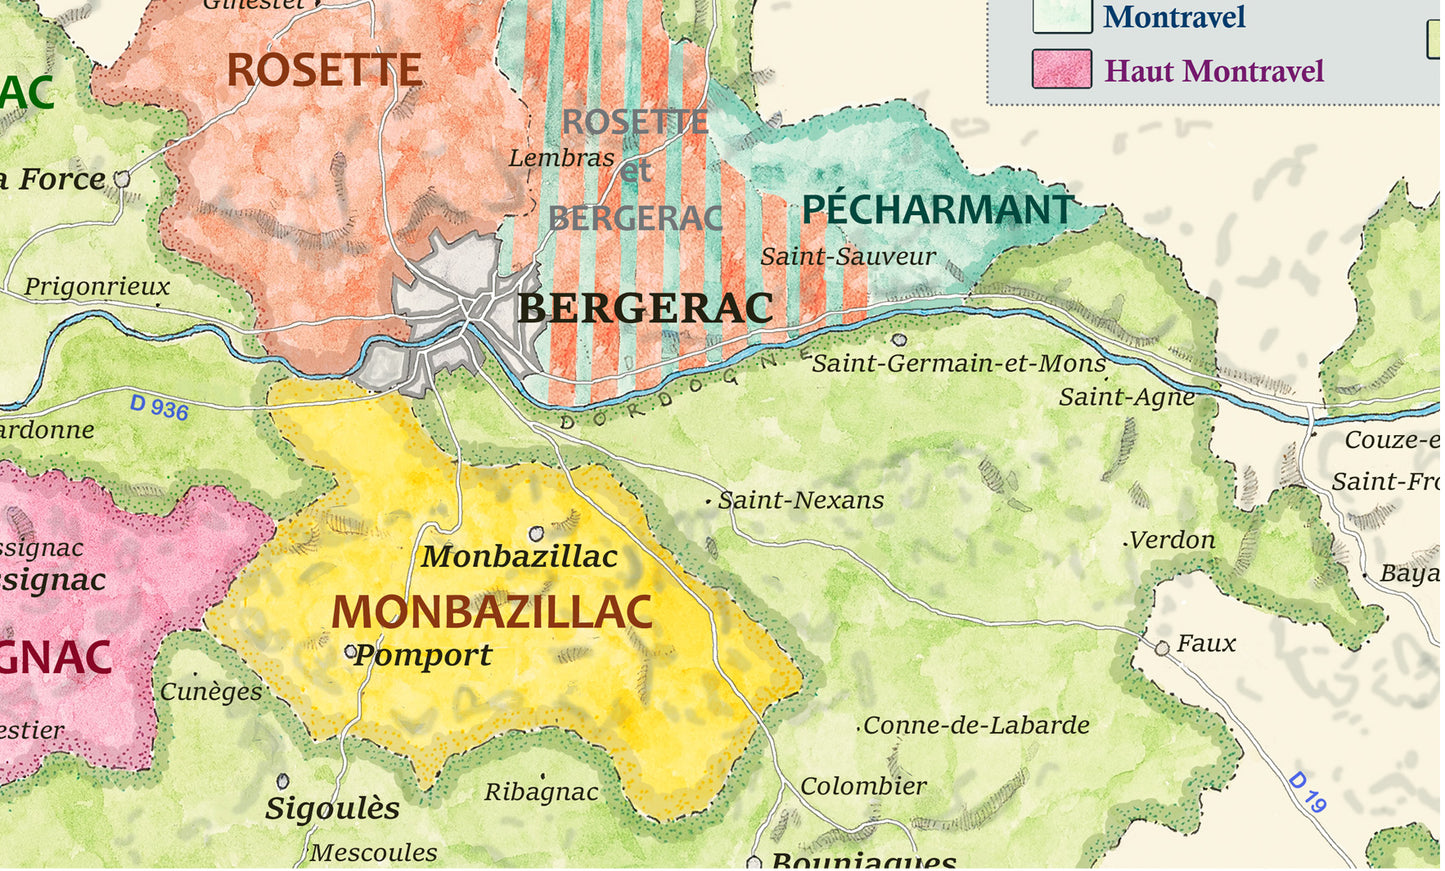 Bergerac wines